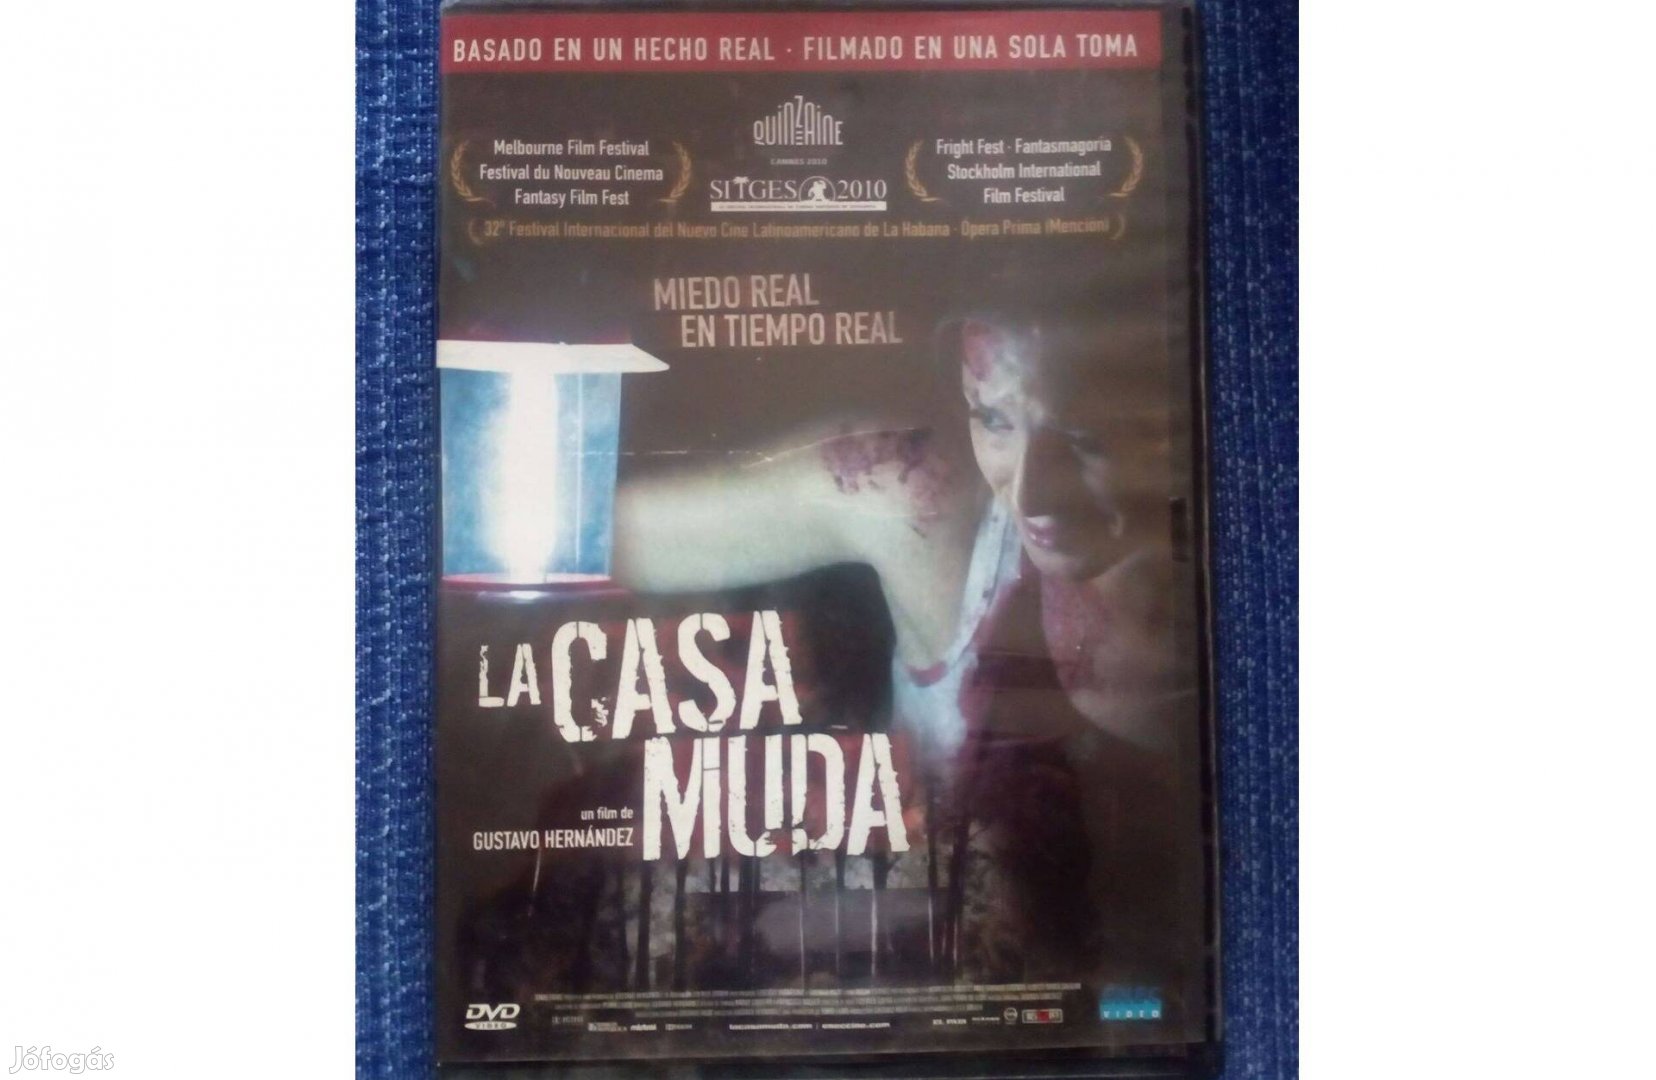 La casa muda (uruguayi filmdráma, 79 perc, 2010)